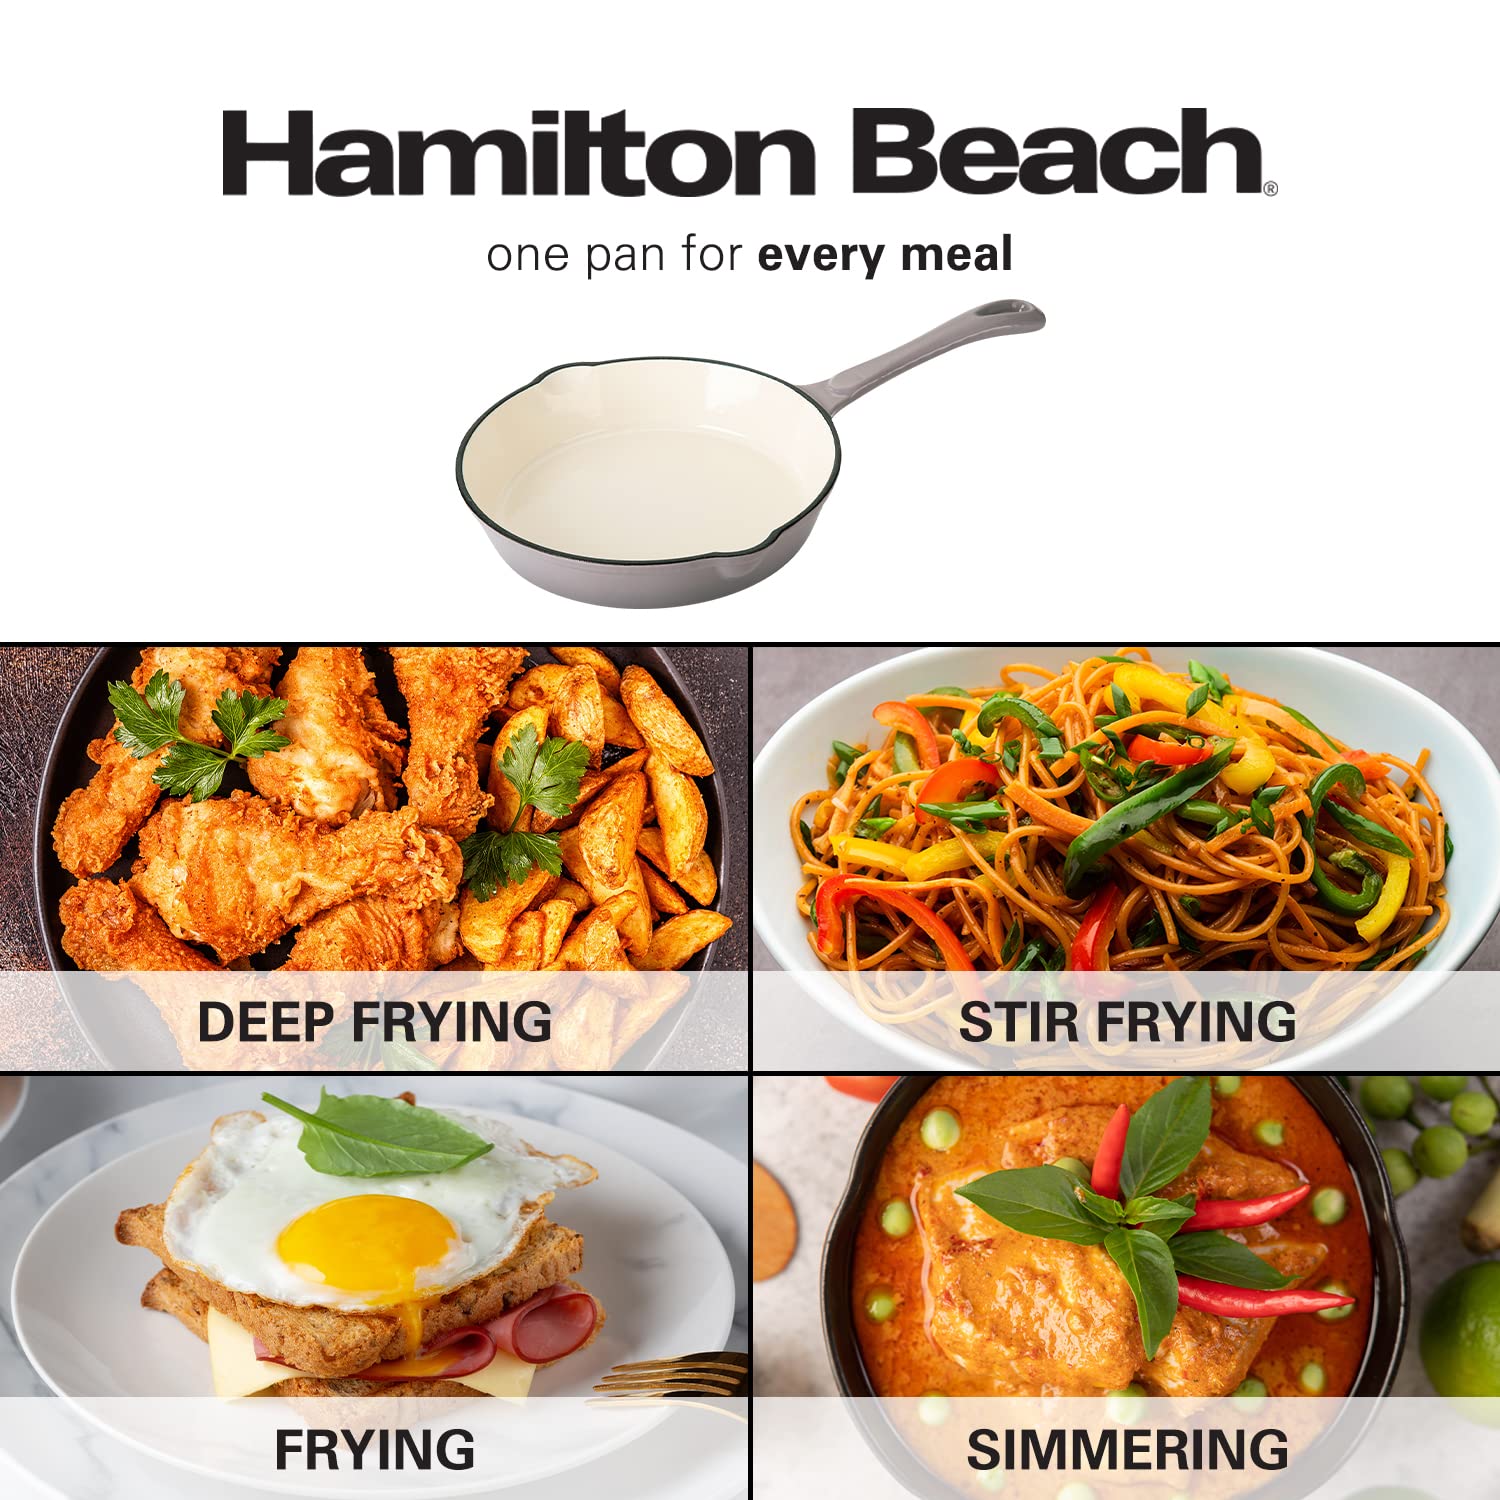 Hamilton Beach Enameled Cast Iron Fry Pan 8-Inch Navy, Cream Enamel co